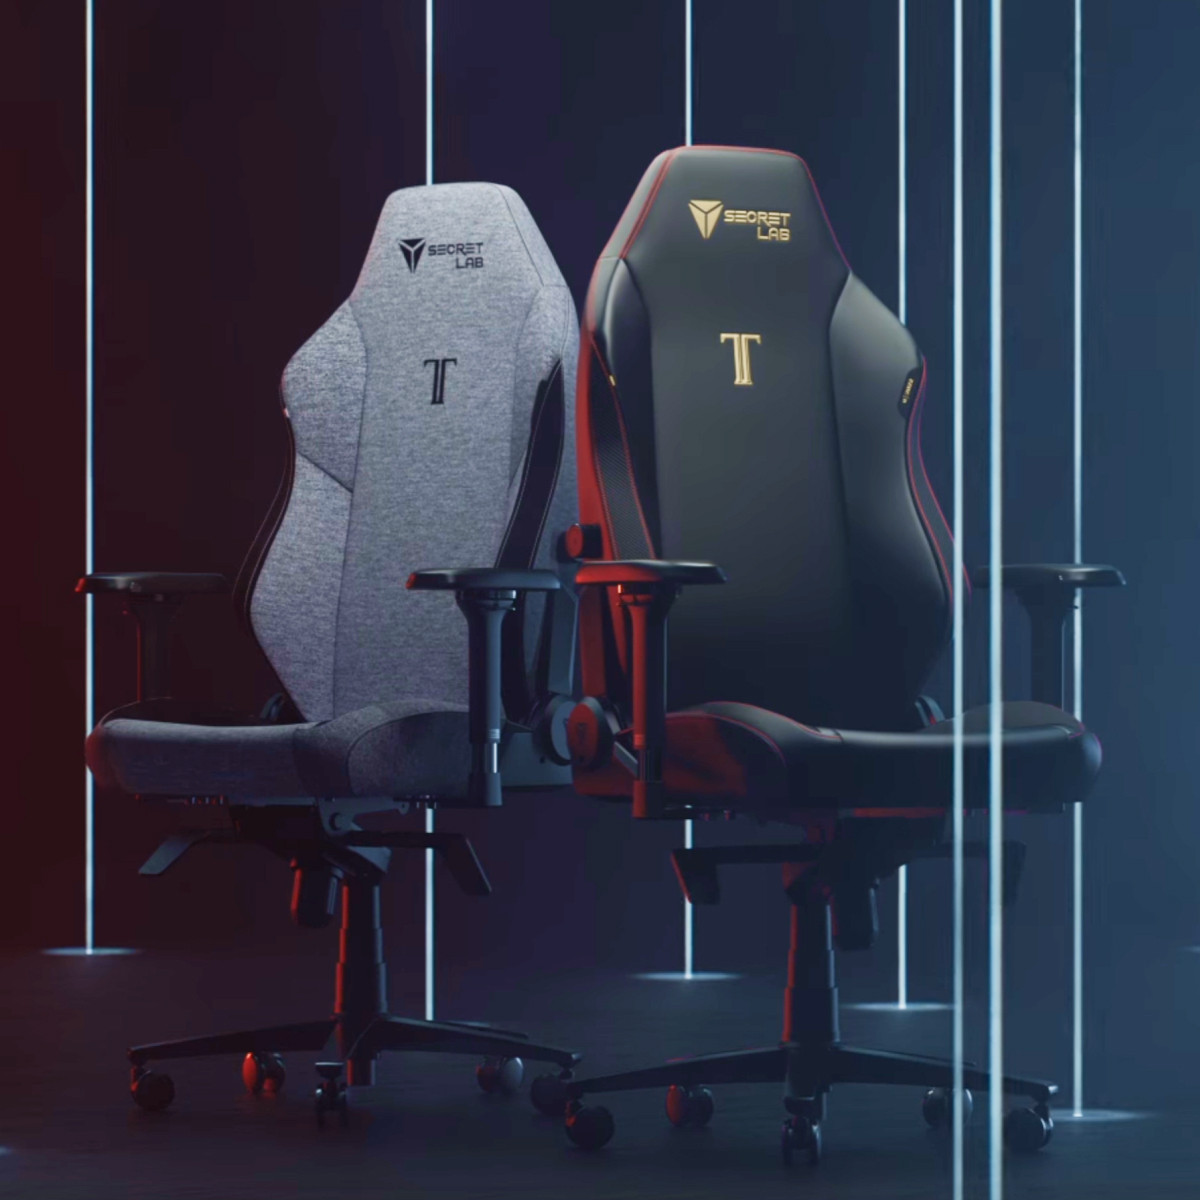 Secretlab Titan Evo 2022 Black3 Gaming Chair - Reclining